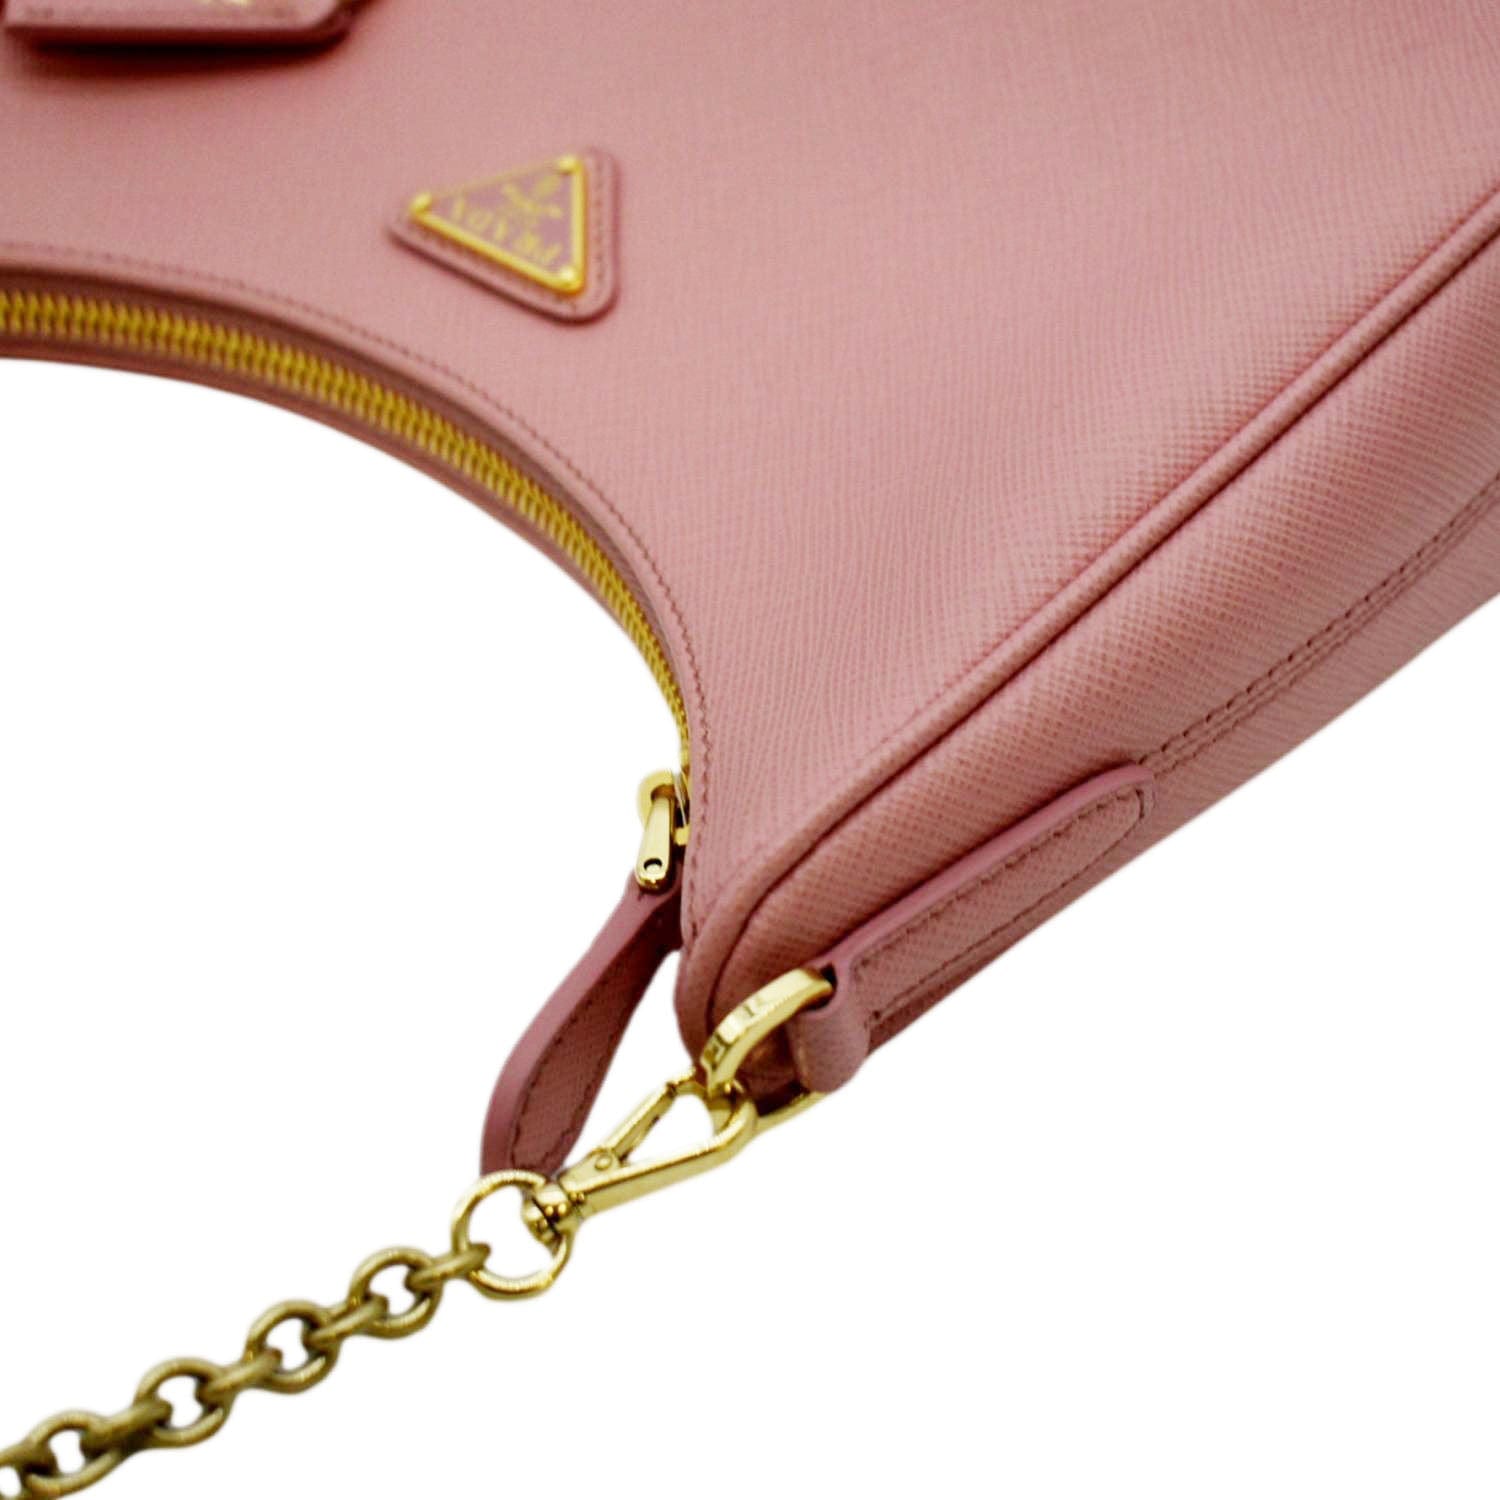 Petal Pink Prada Re-edition 2005 Saffiano Leather Bag